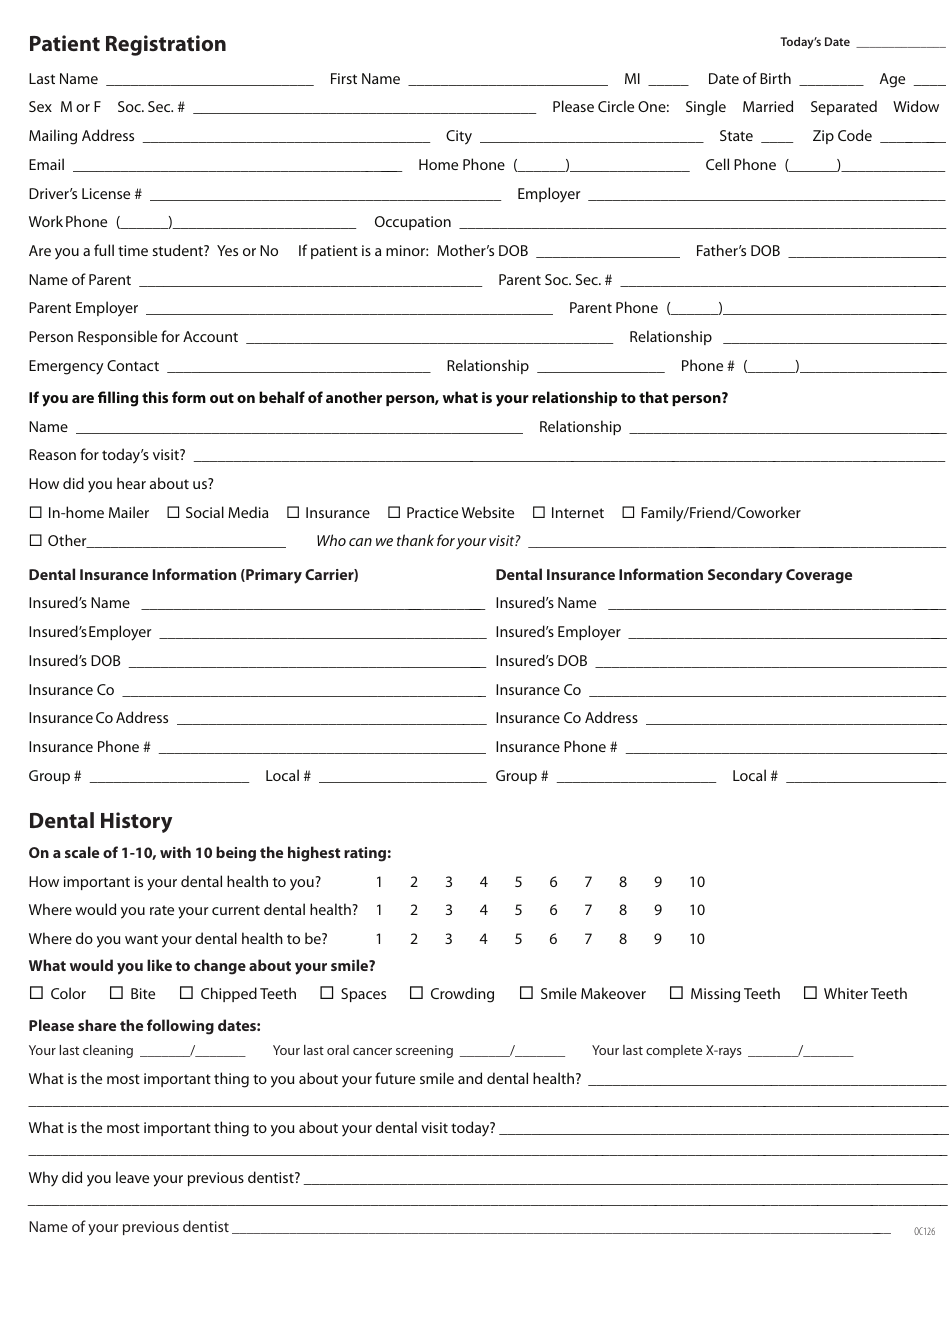 Dental Patient Registration Form Template with American Dental Association.